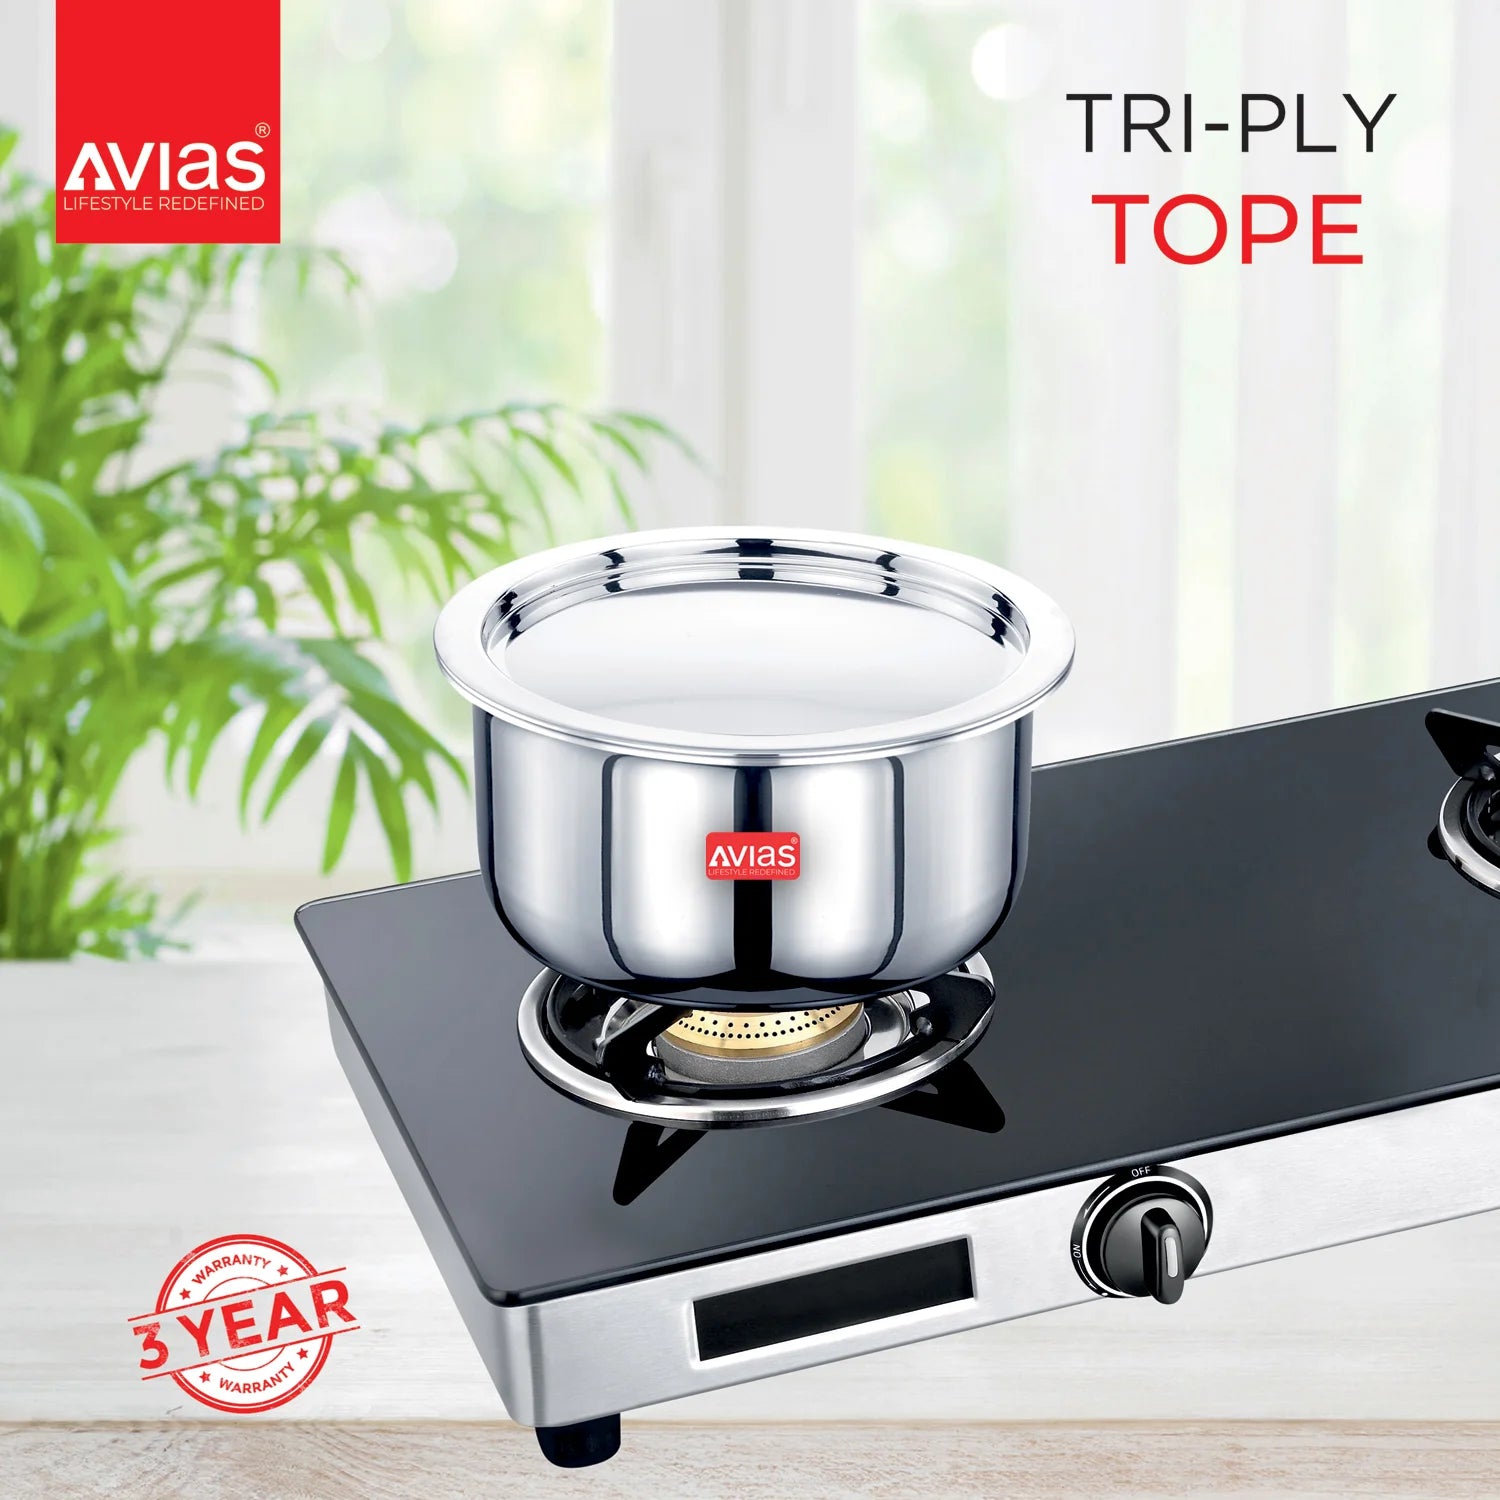 AVIAS Riara premium stainless steel Triply Tope on stove